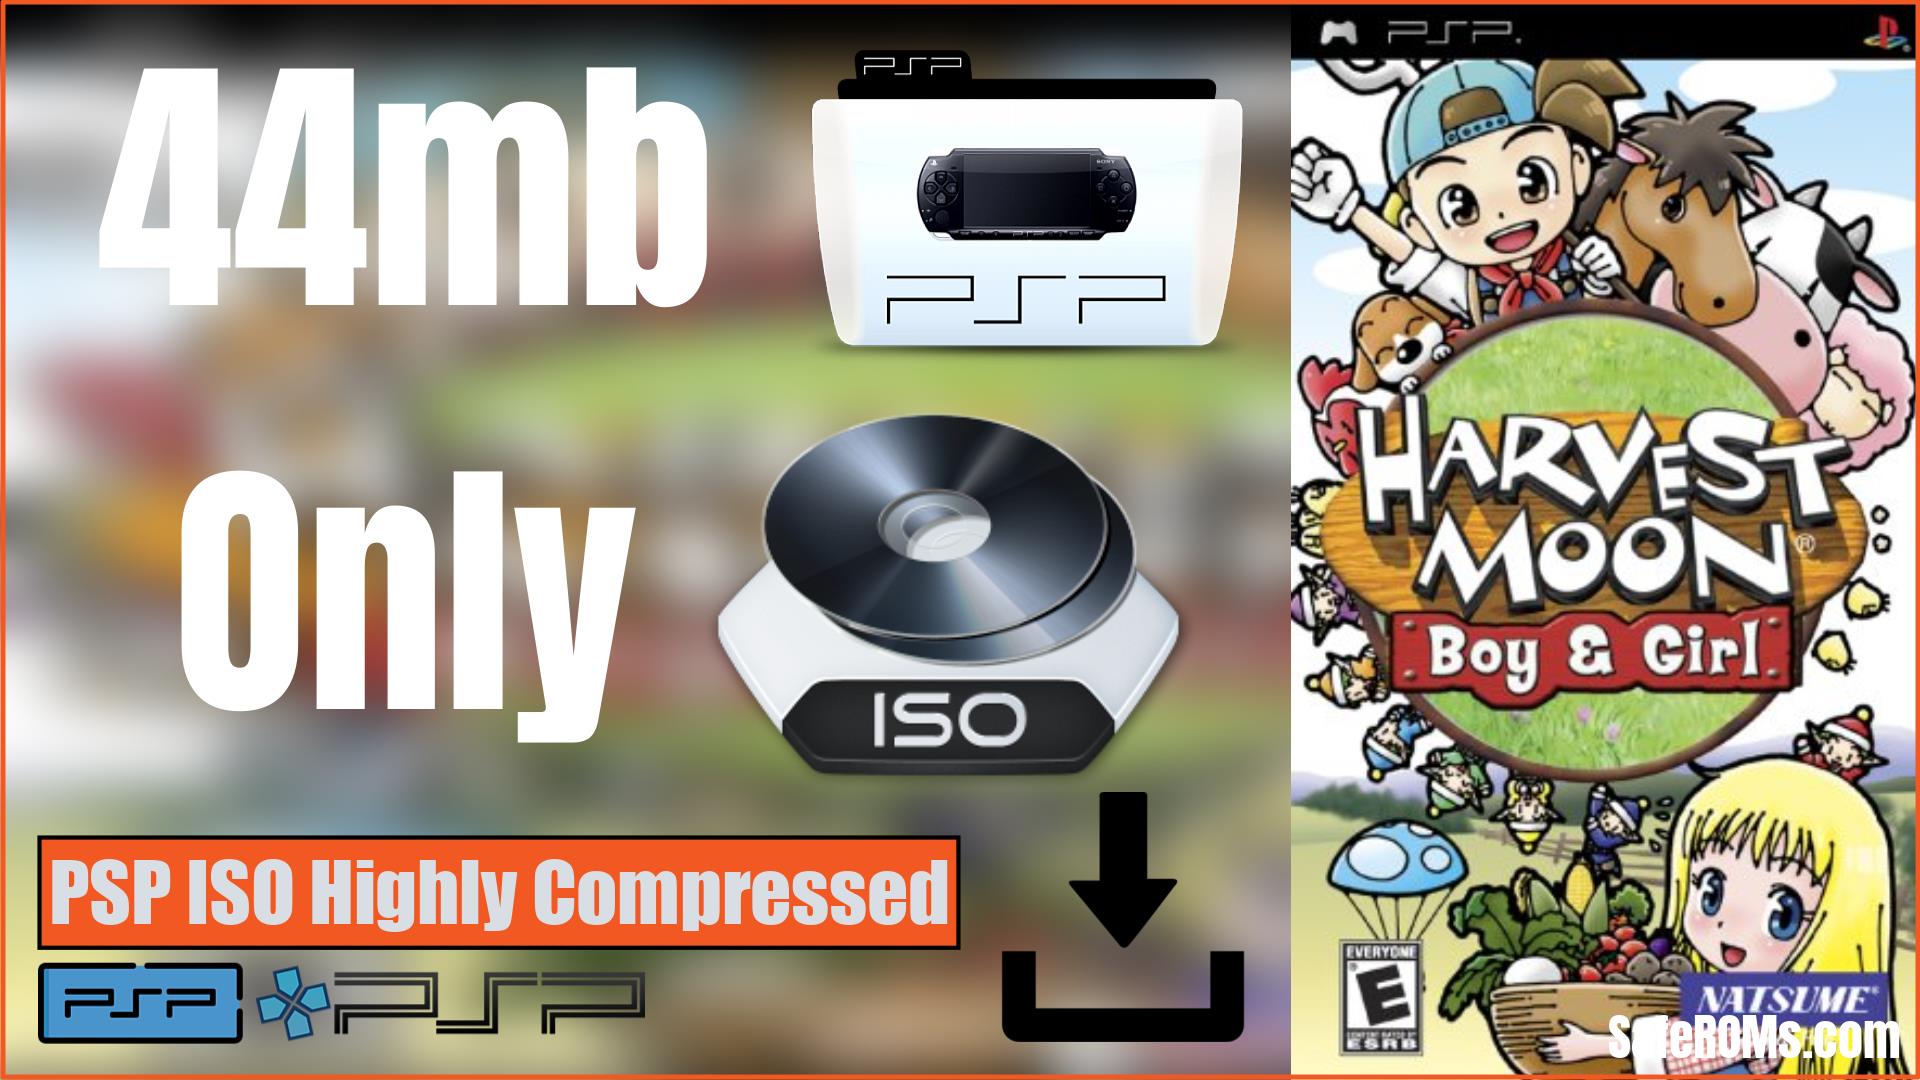 Harvest Moon Boy & Girl PSP ISO Highly Compressed Download